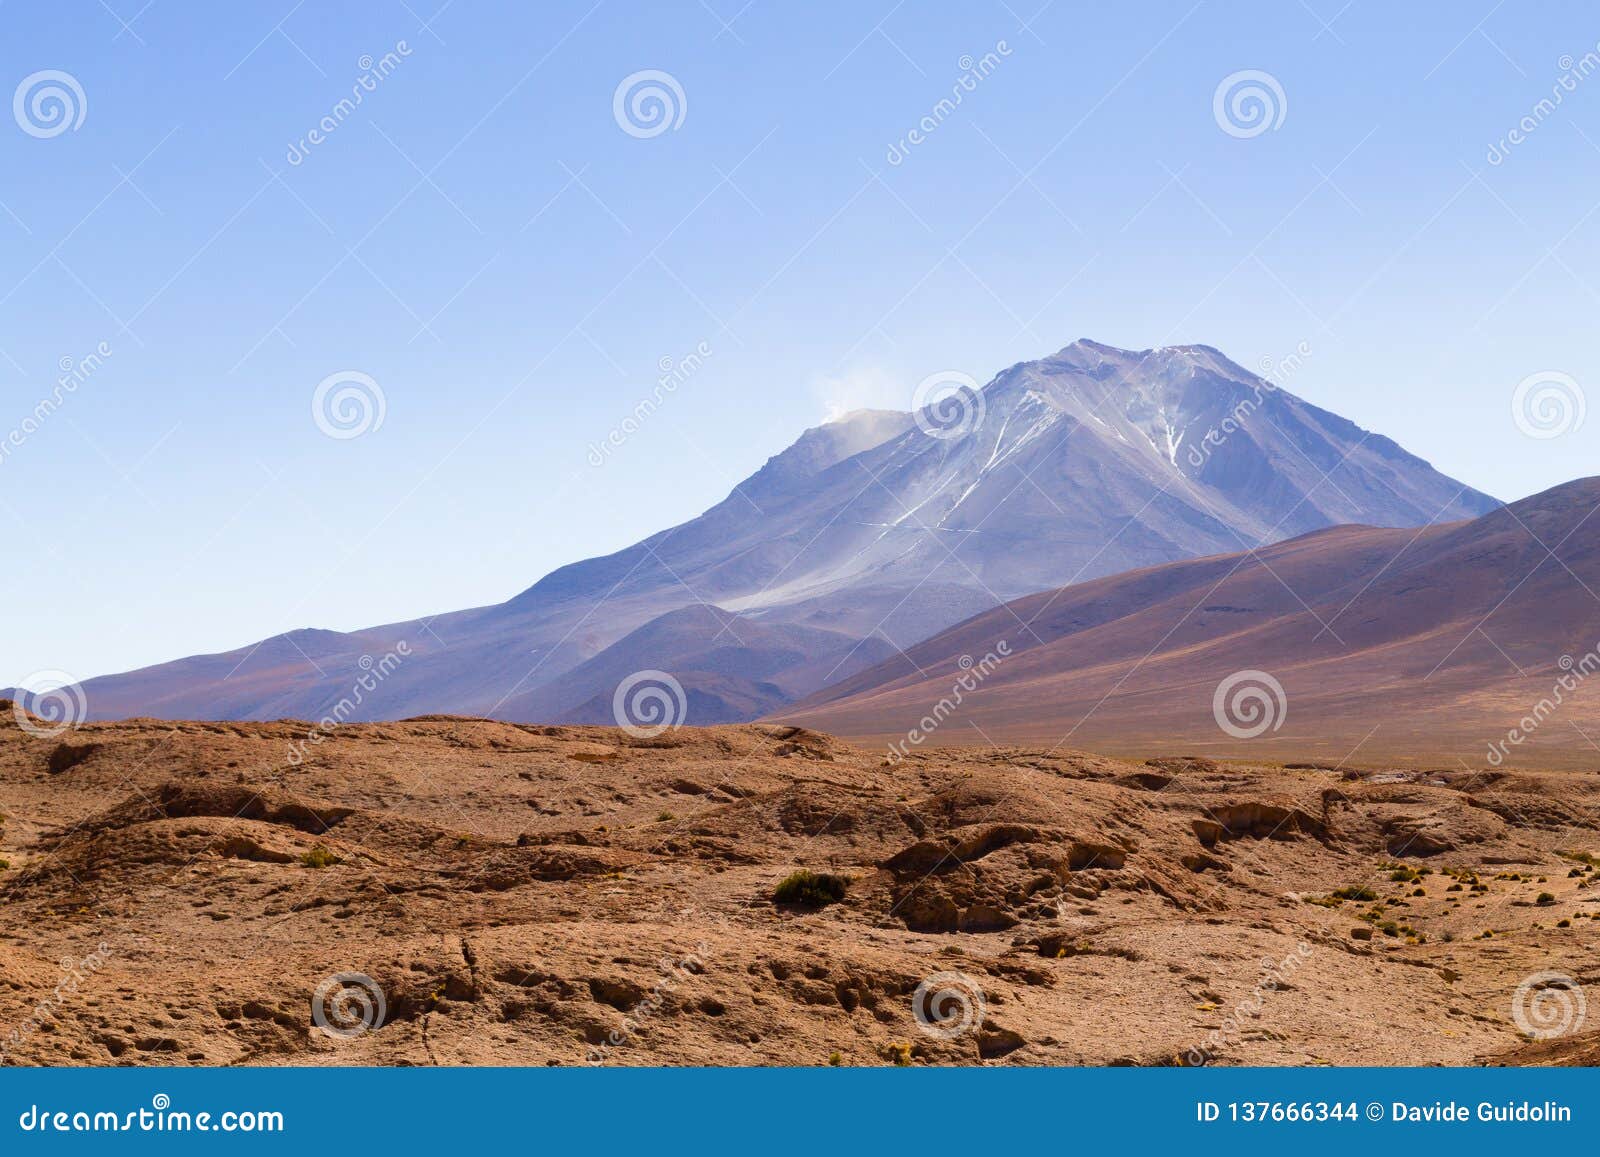 Bolivian Mountains Landscape,Bolivia Stock Photo - Image ...